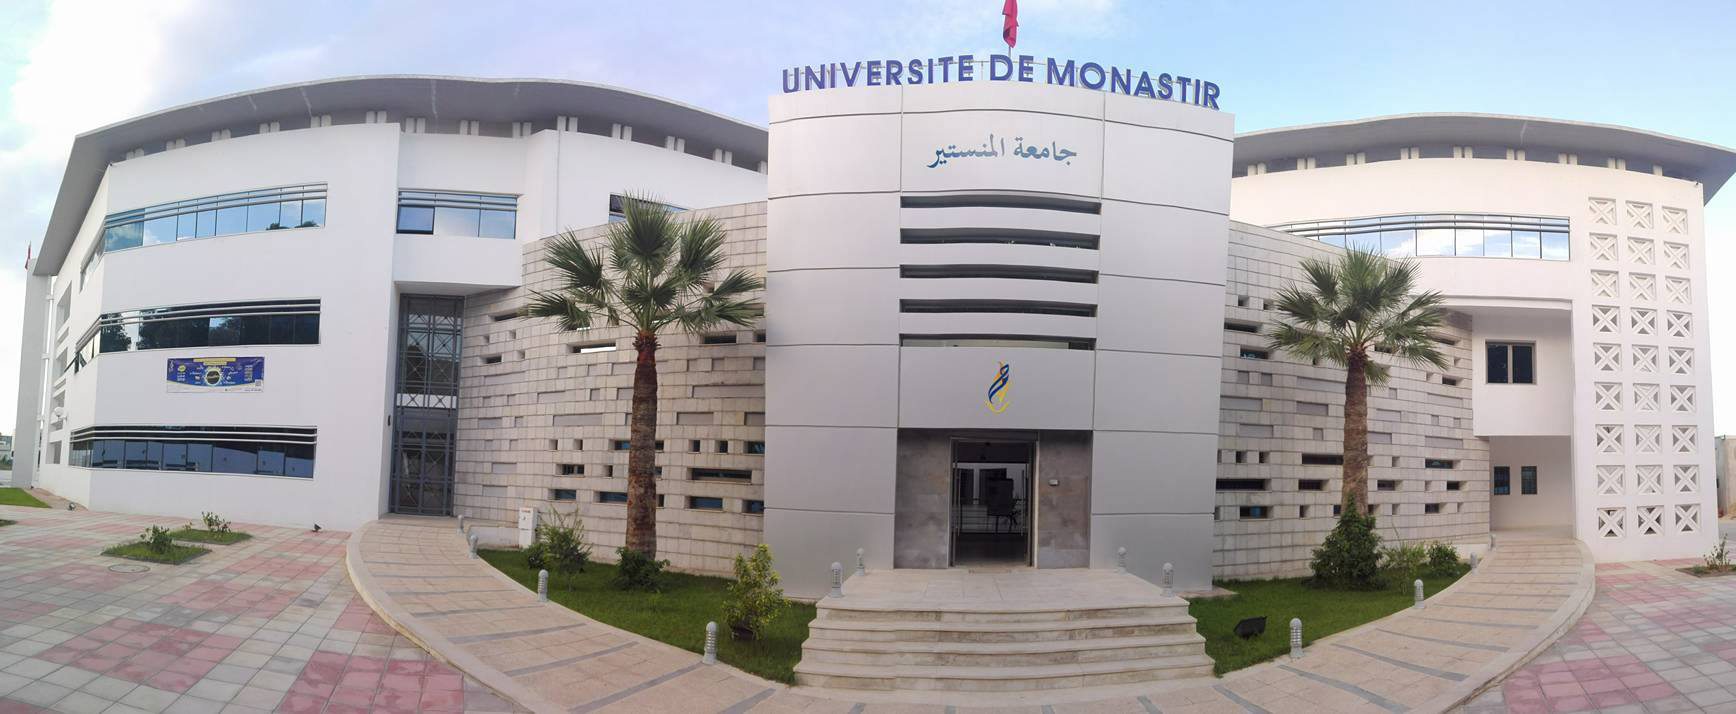 siege-Université de monastir